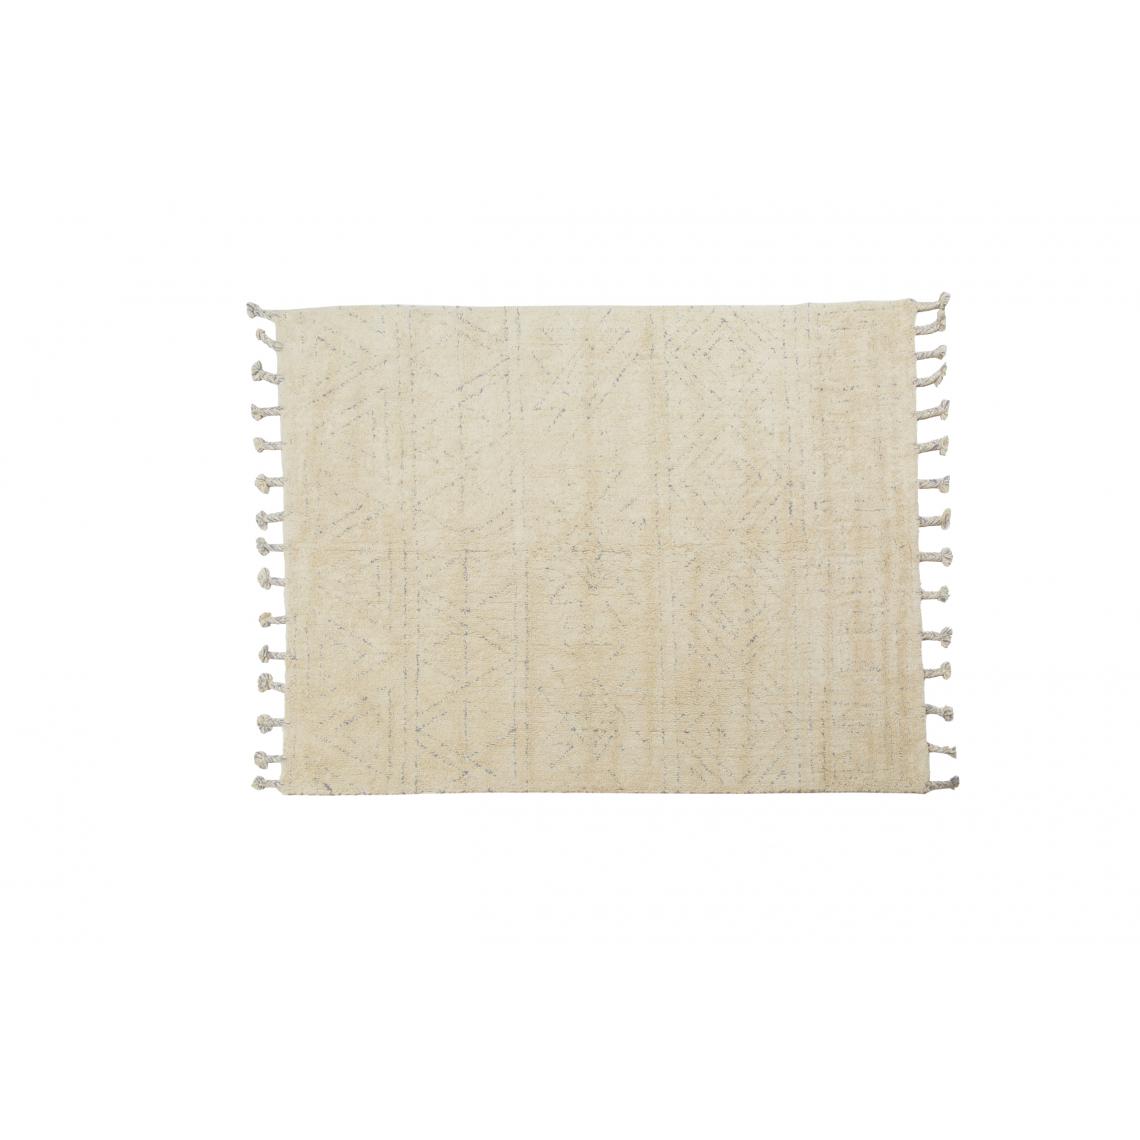 Alter - Tapis Californie moderne, style kilim, 100% coton, ivoire, 230x160cm - Tapis